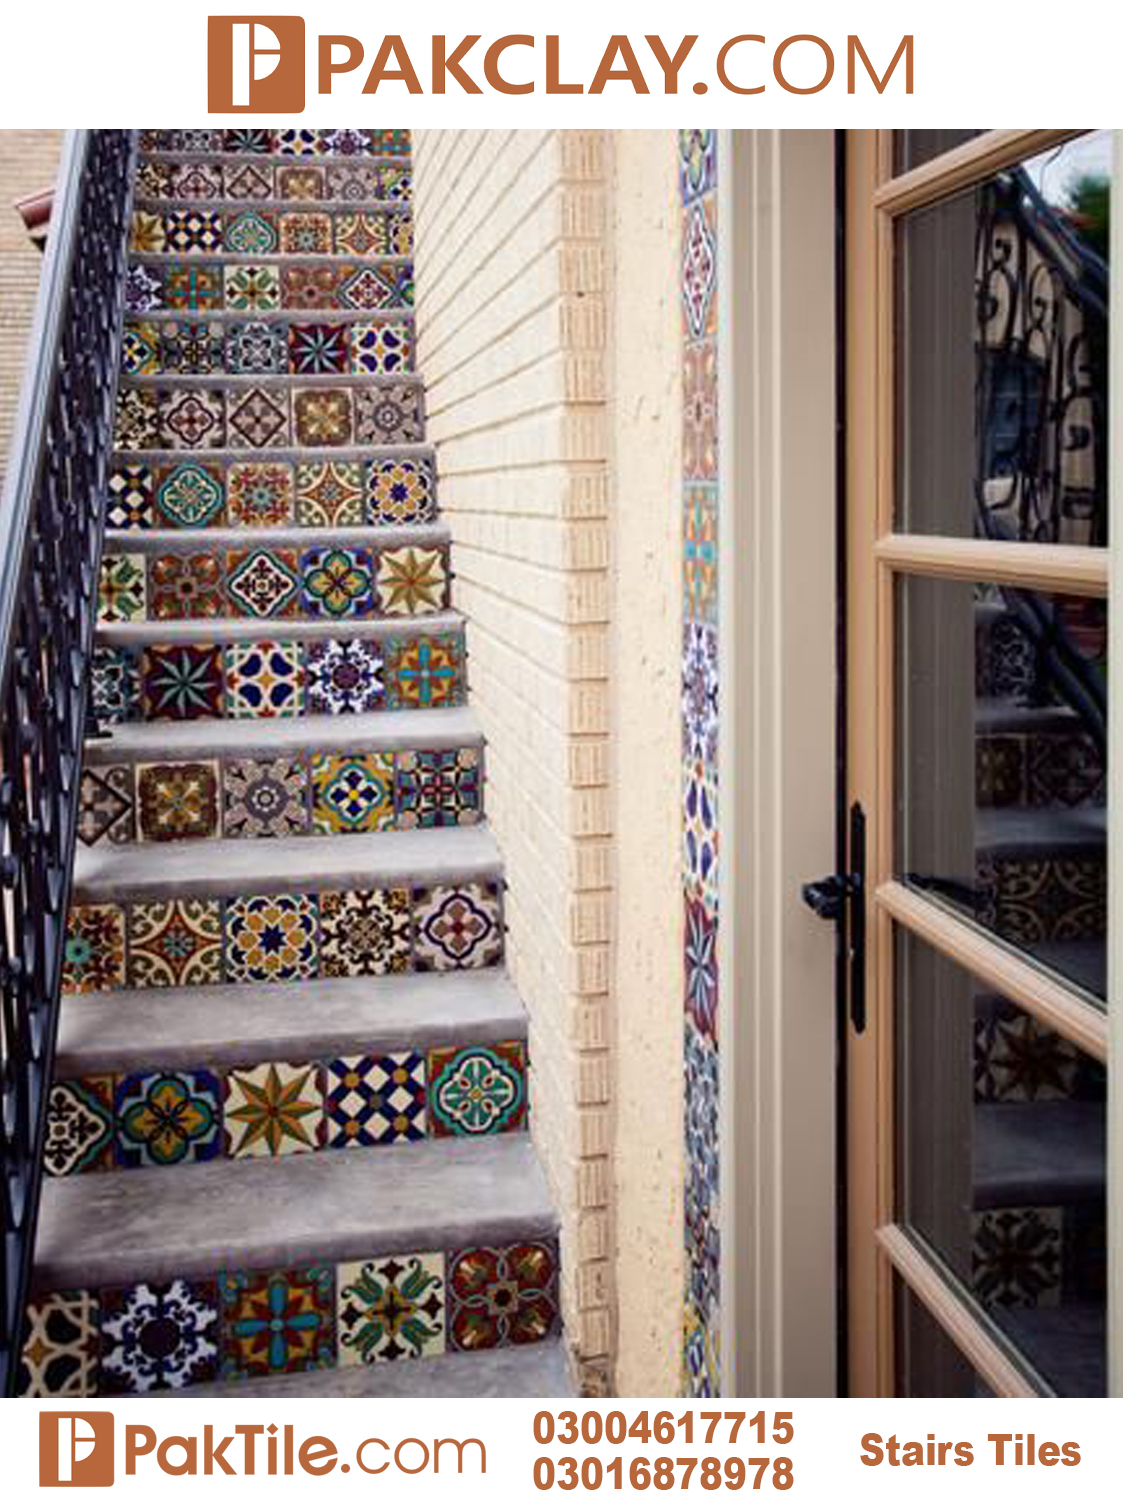 5 Outdoor Staircase Tiles Design in Pakistan